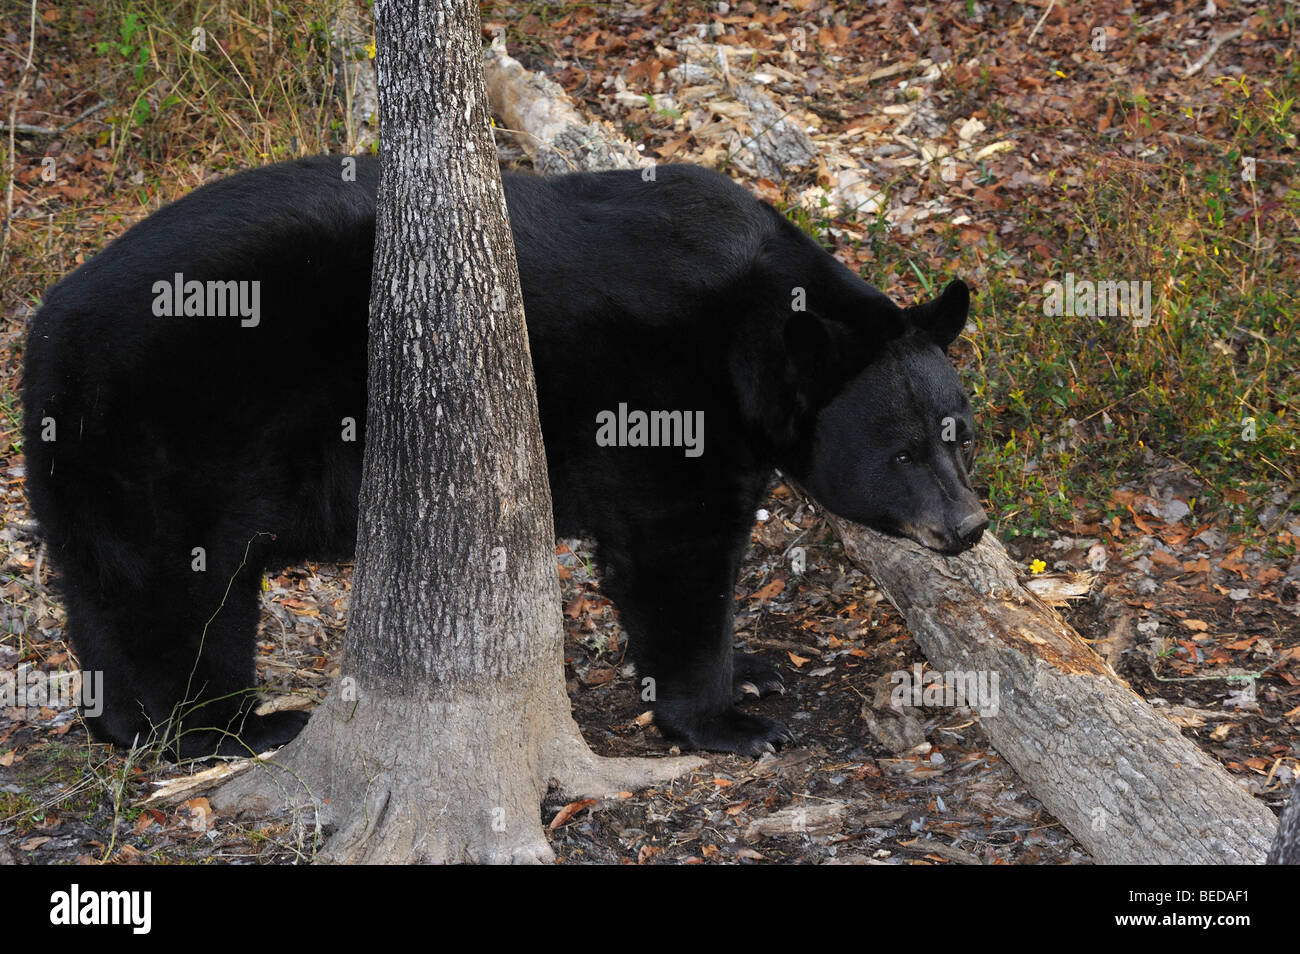 Black bear, Ursus americanus, Florida, captive Stock Photo